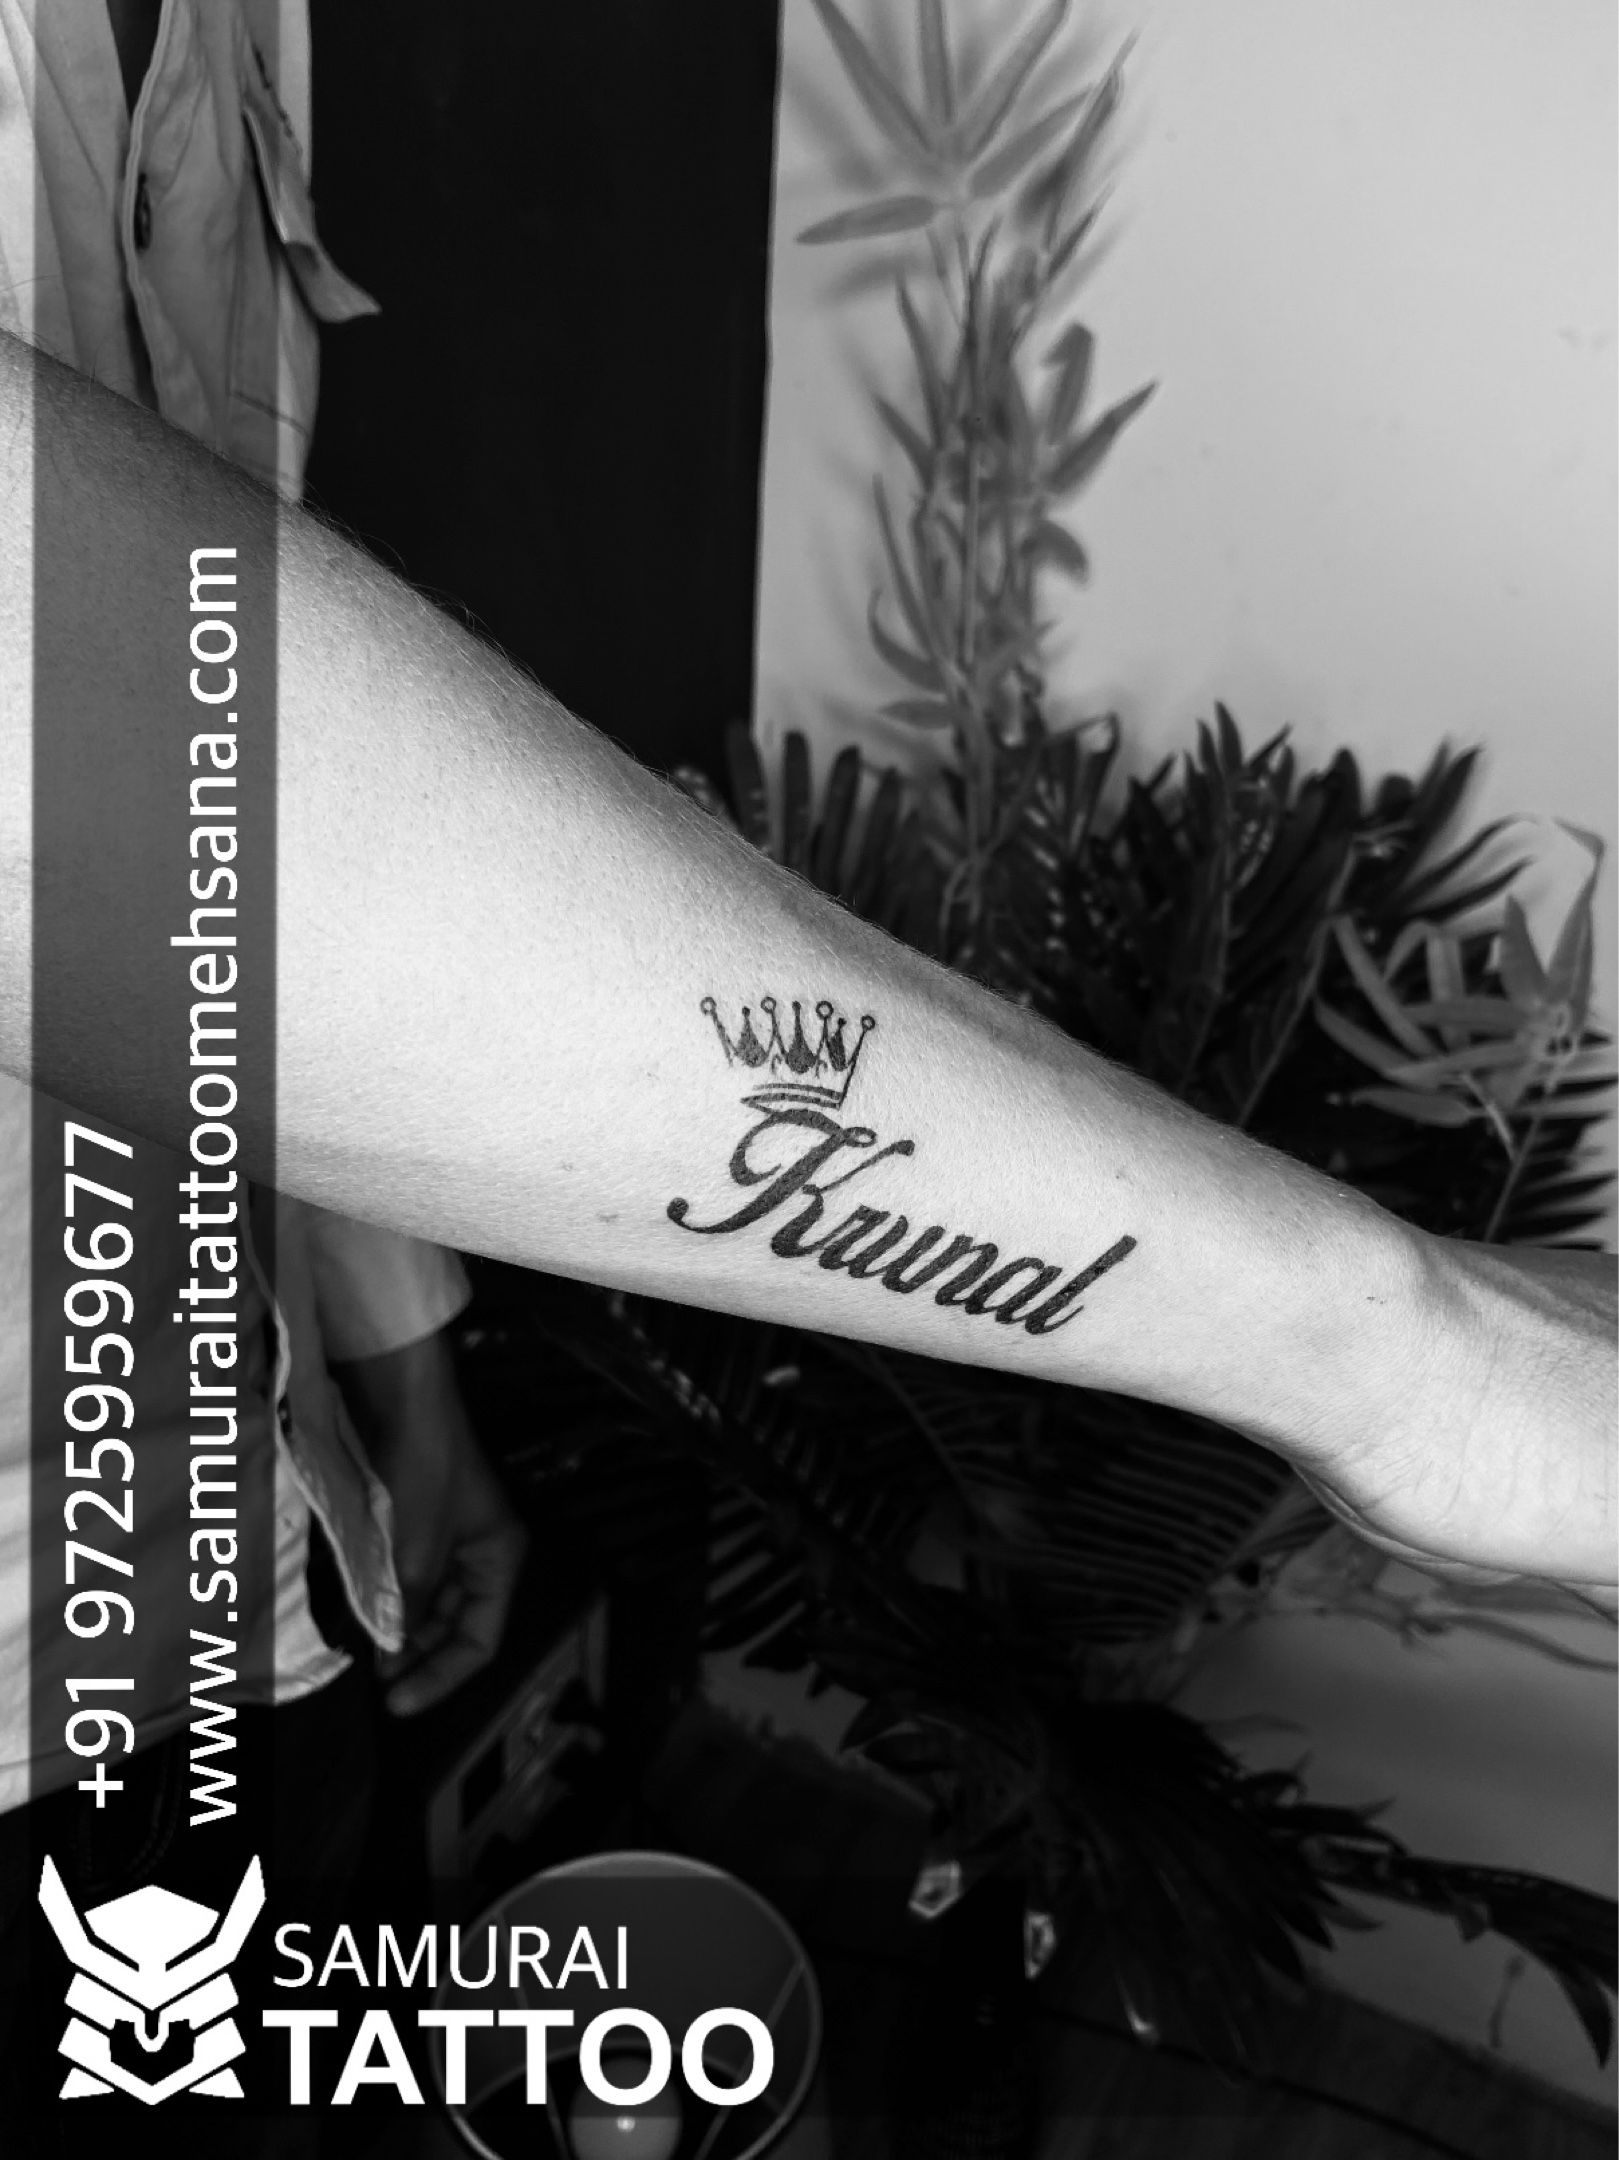 Crazy ink tattoo  Body piercing on X KANHAJI NAME TATTOO WITH PEACOCK  FEATHER TATTOO DESIGN kanhFor more info visithttpstco21FuyhwO0a  httpstcoEPSS6TTG7a  X